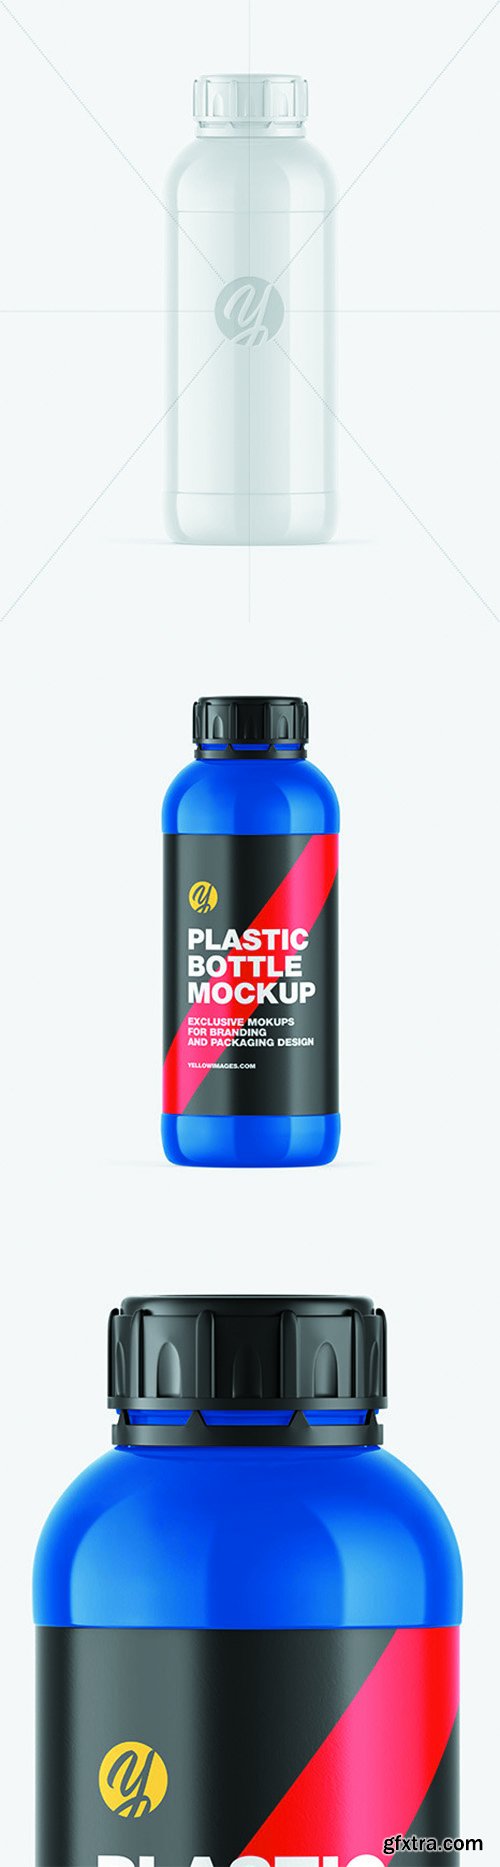 Glossy Plastic Bottle Mockup 66330